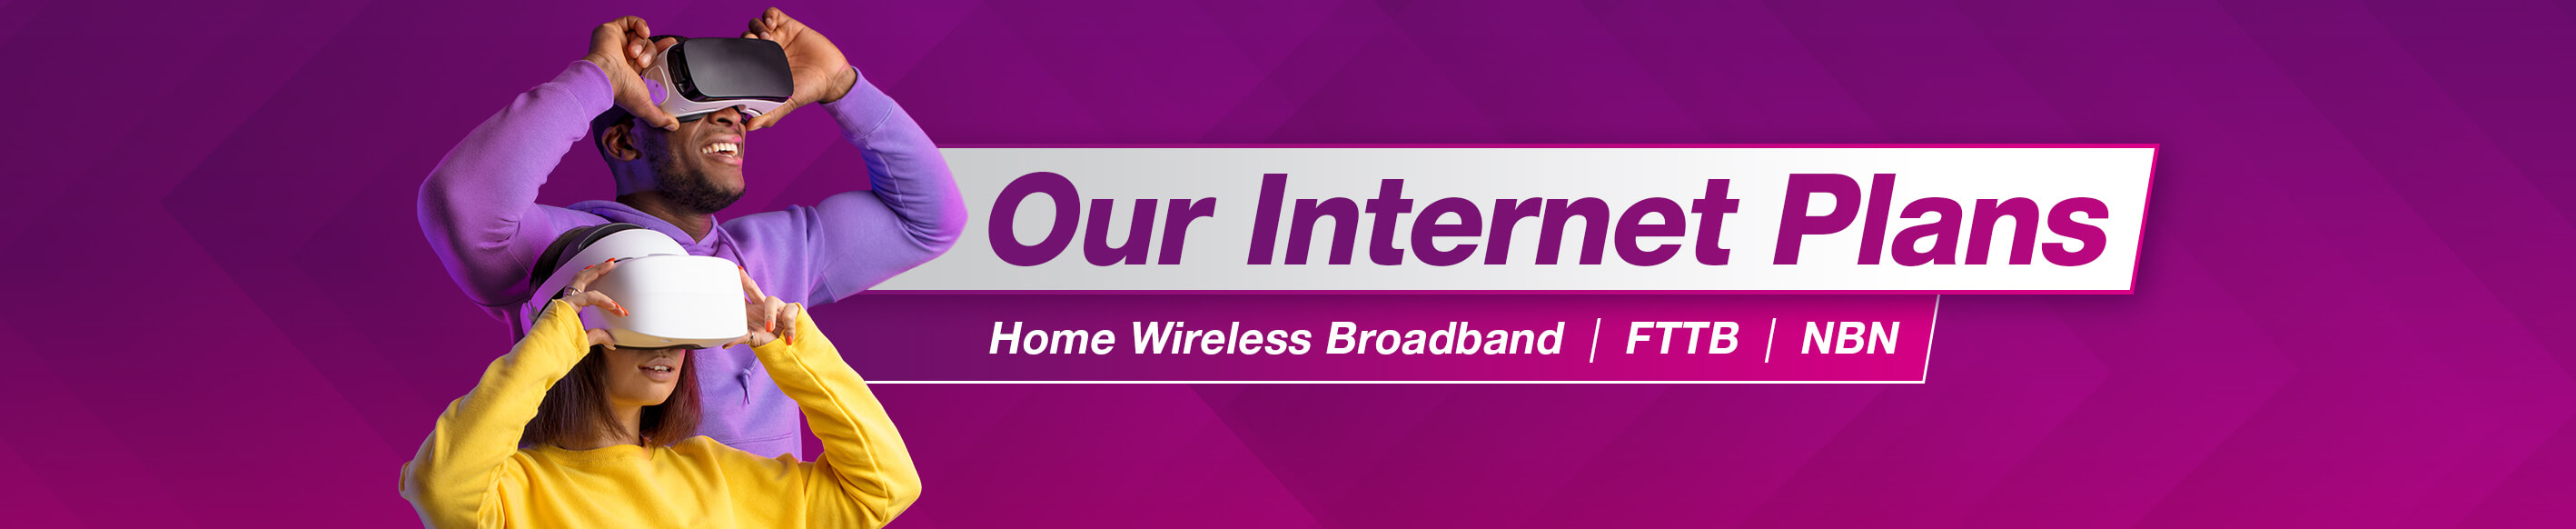 TPG Internet Plans | Home Wireless Broadband, FTTB, NBN